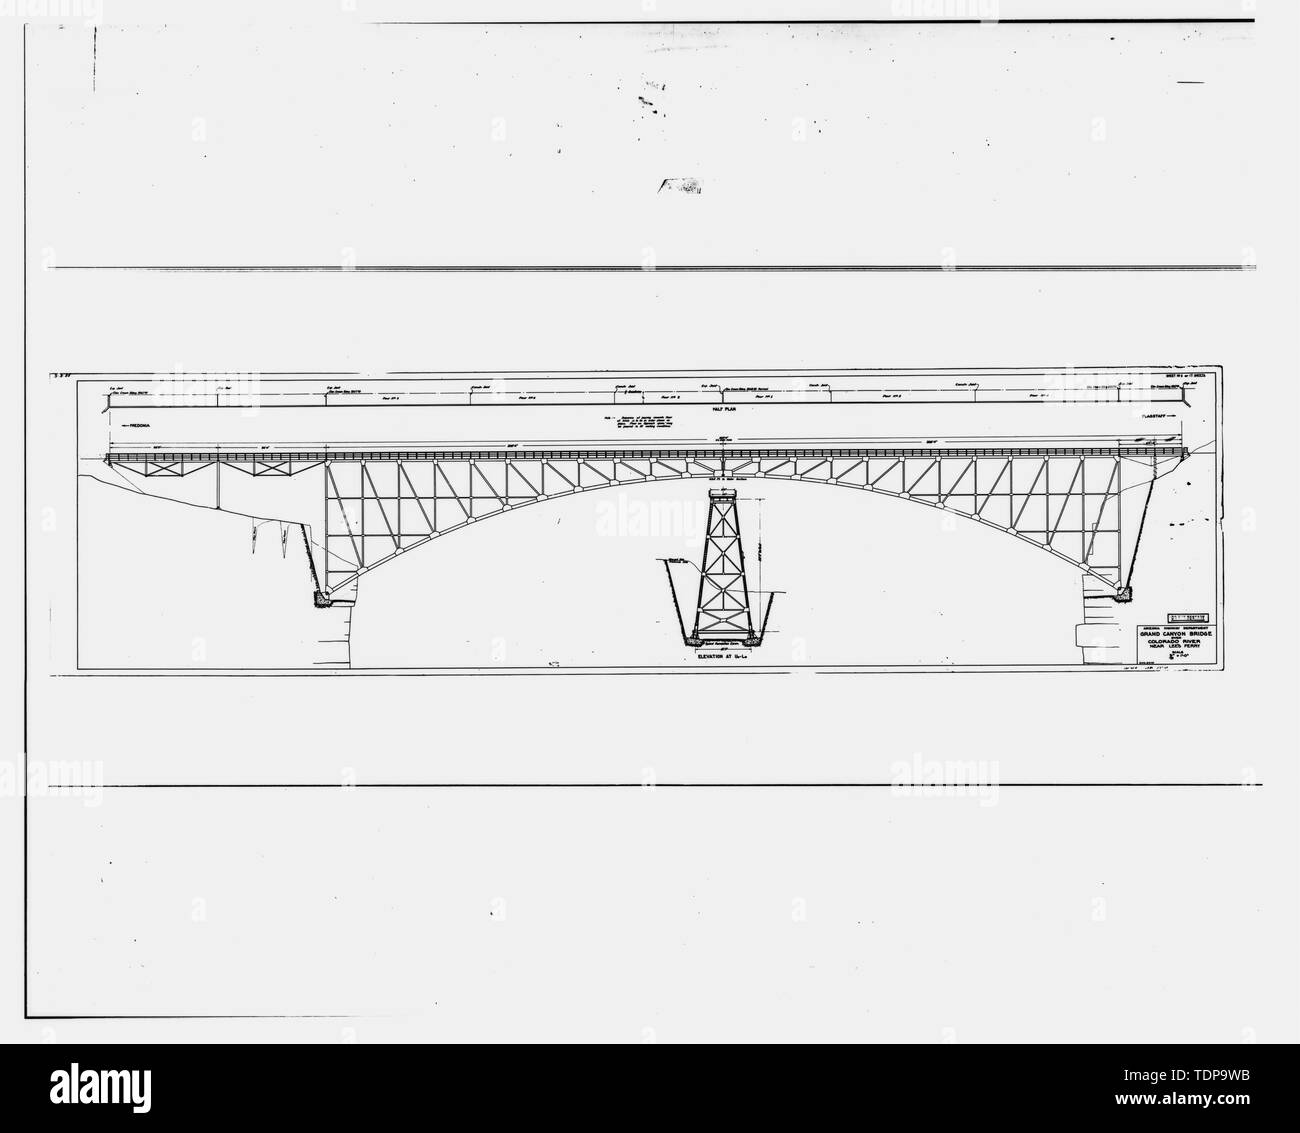 Photocopy of construction drawing, Arizona Highway Department, May 